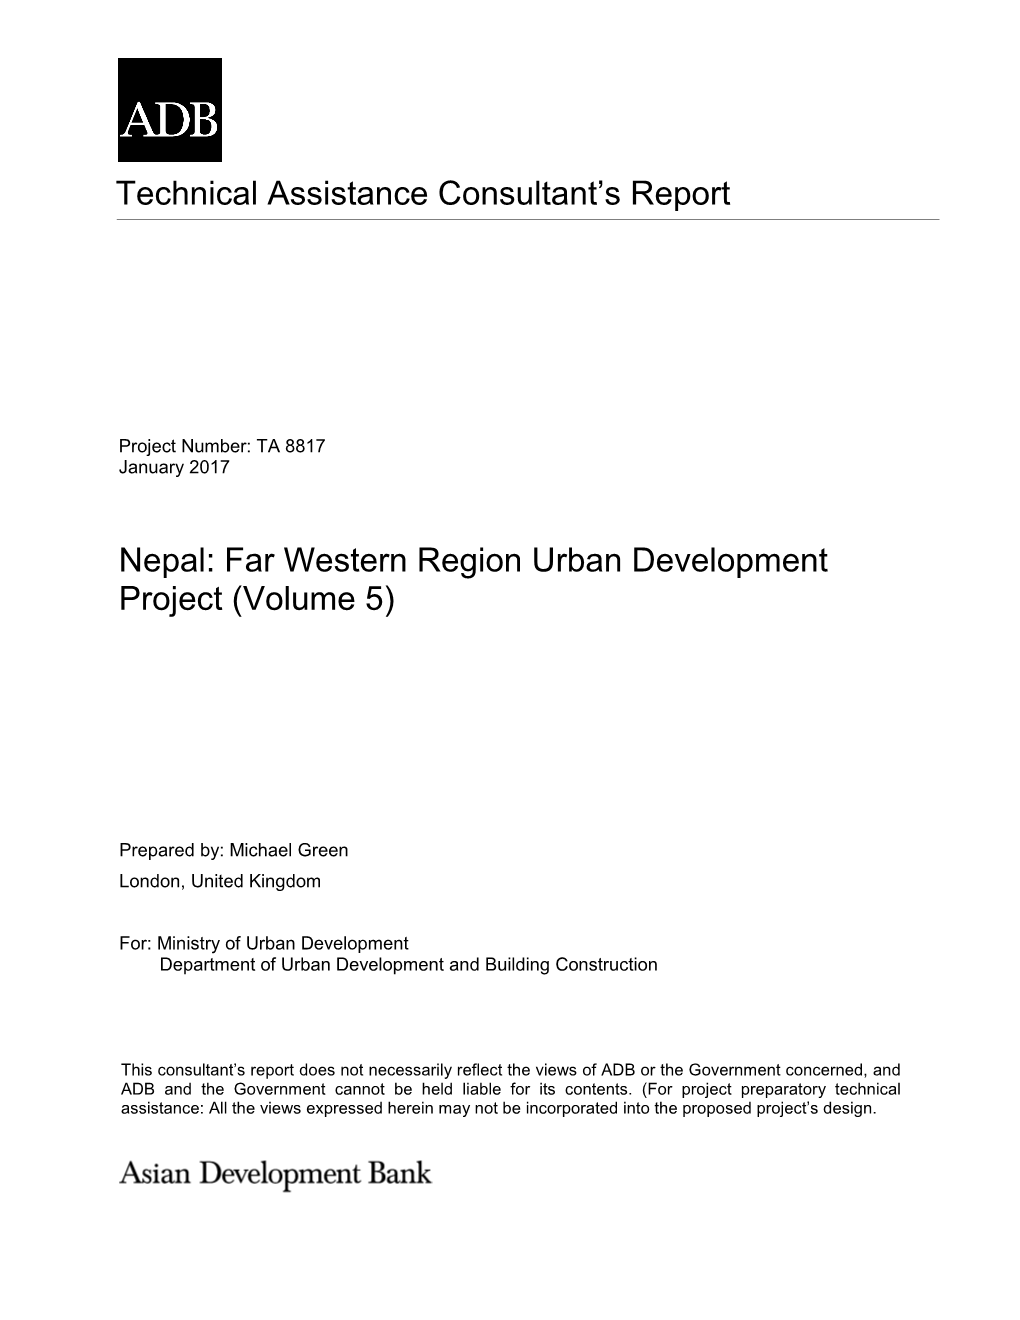 Nepal: Far Western Region Urban Development Project (Volume 5)